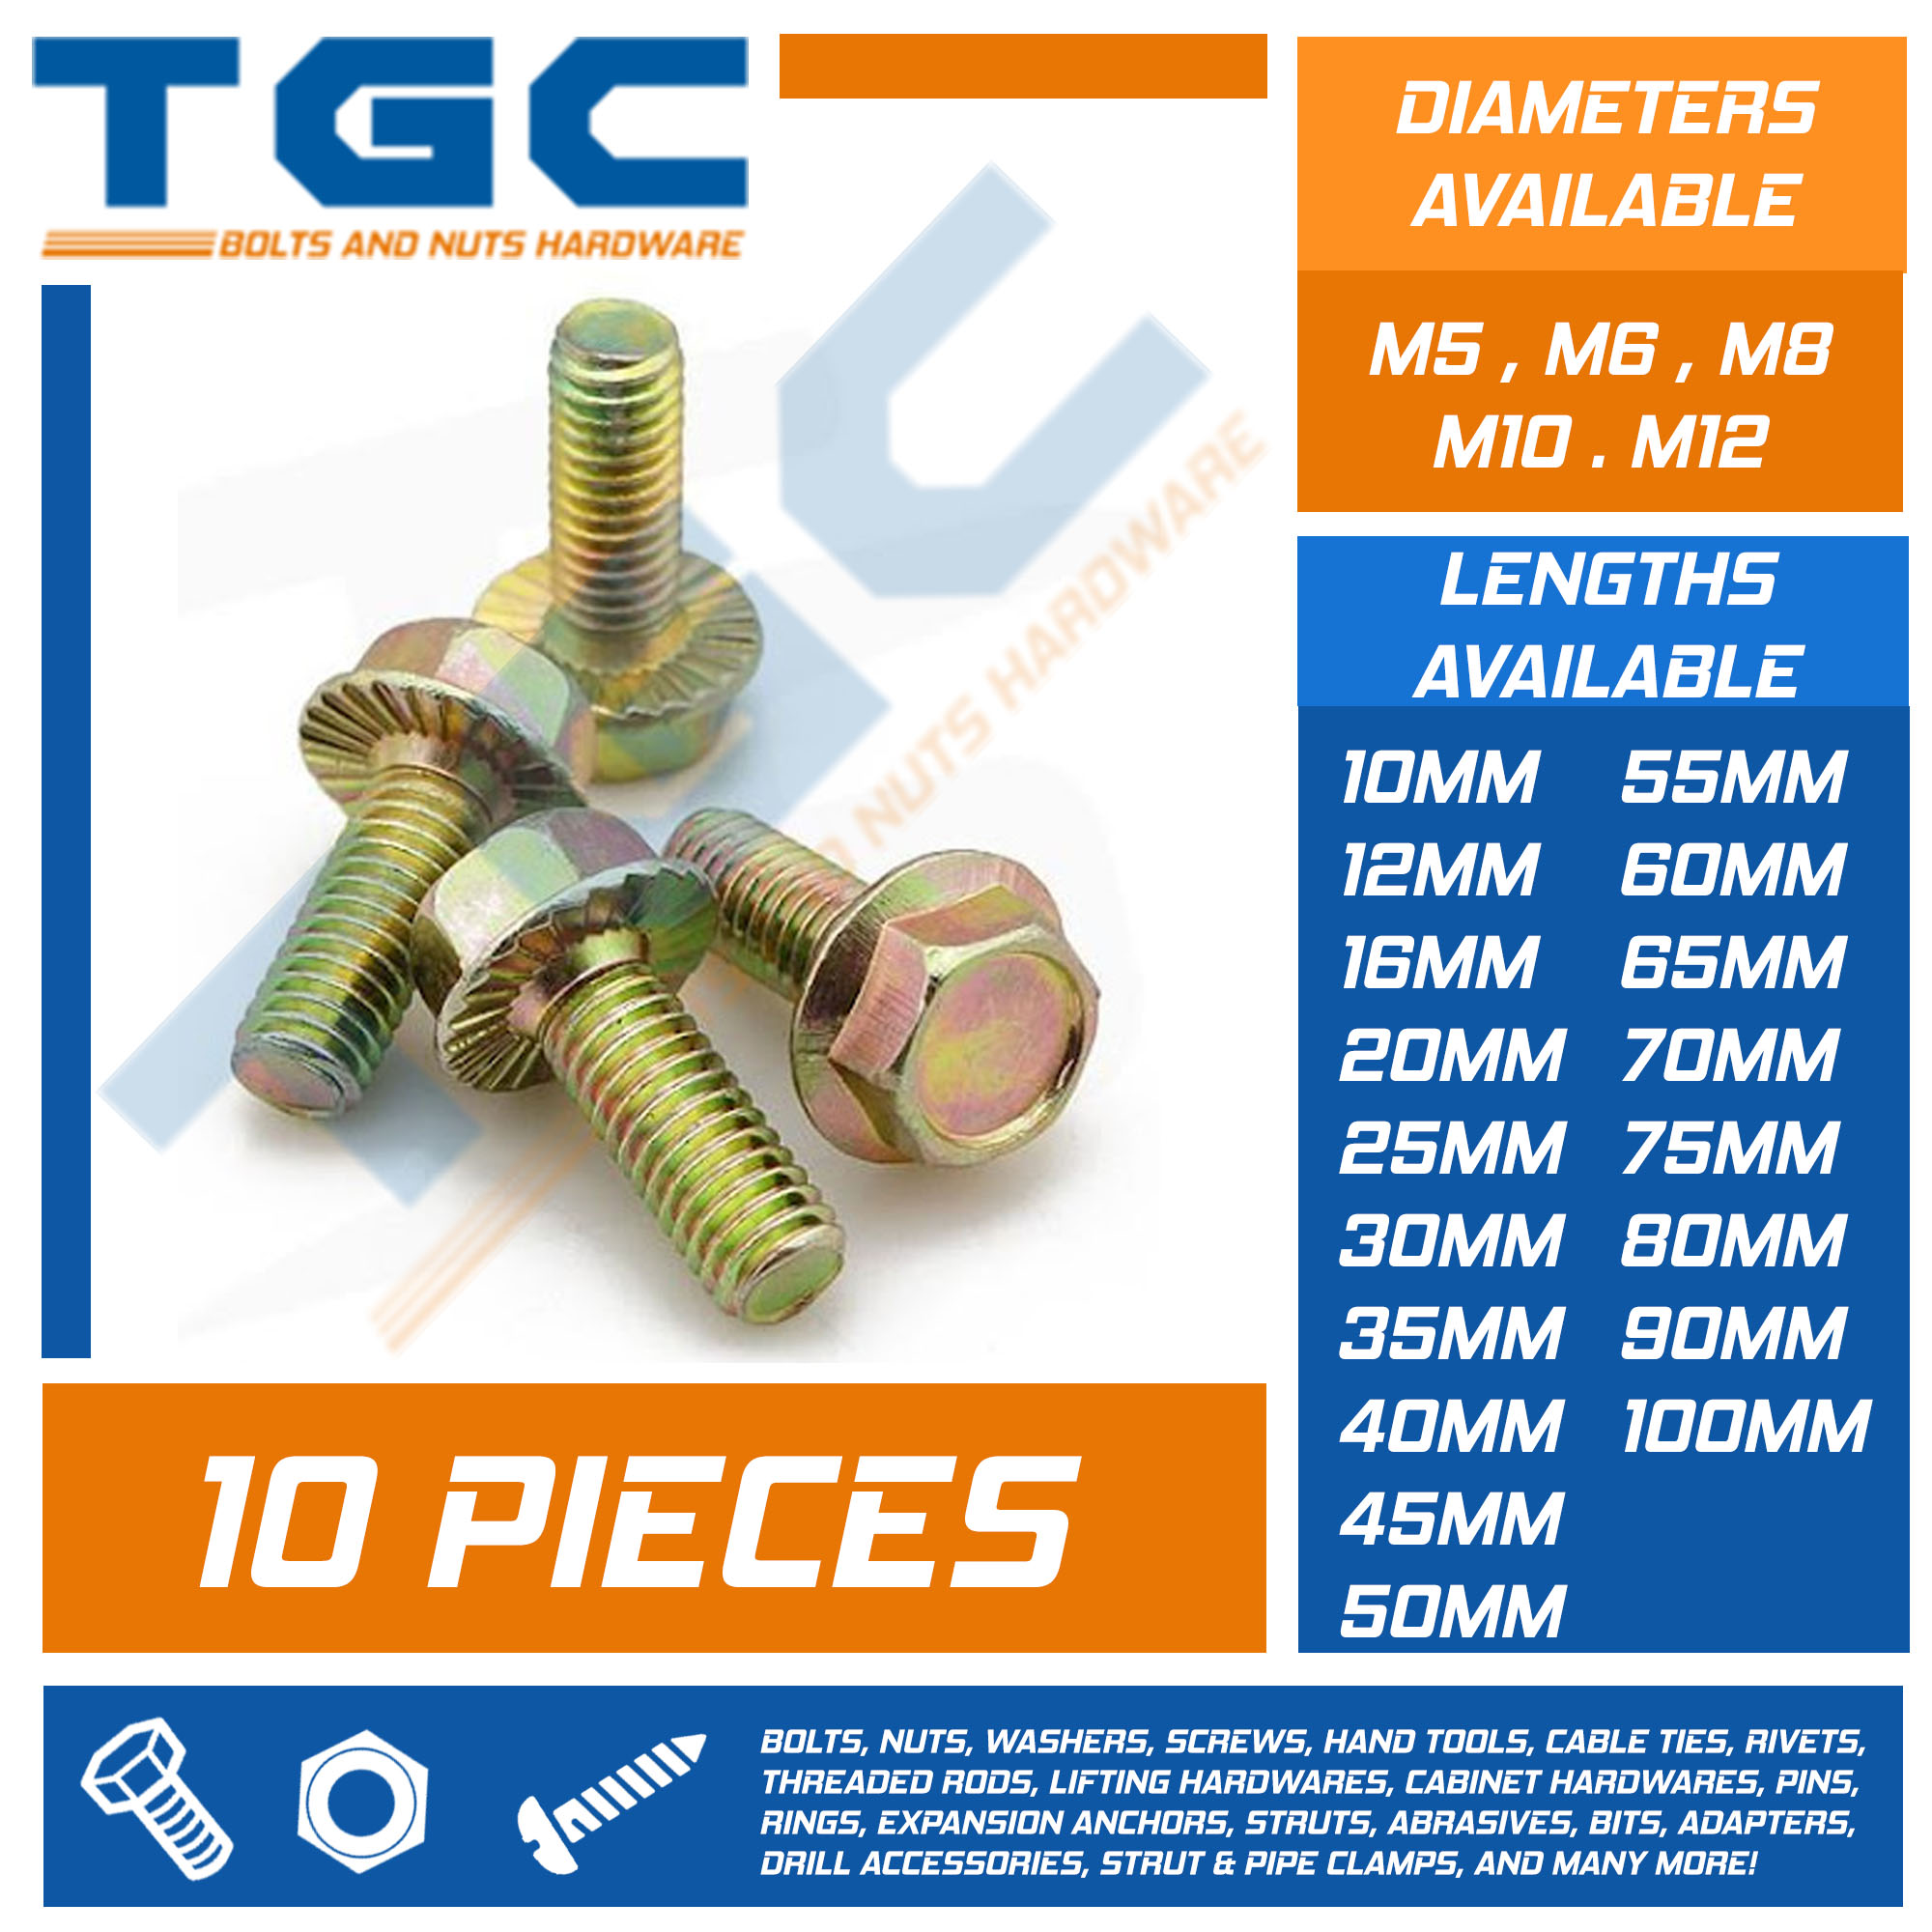 TGC 10PCS Flange Bolt M x 10~100 mm NC Tetanized Hex Washer Head Screw  Plated Flanged Bolt Lazada PH